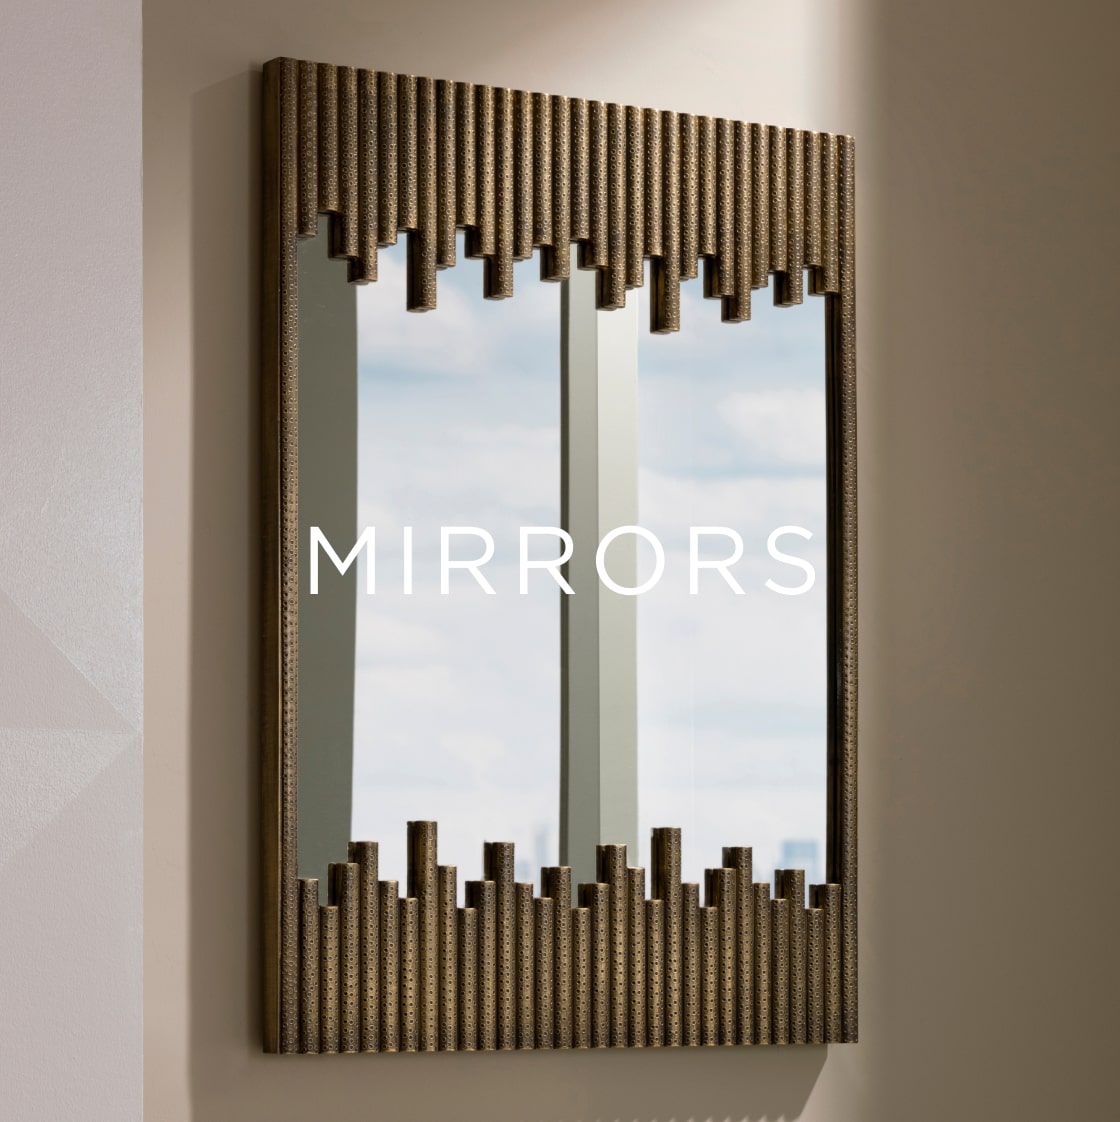 Arteriors mirrors